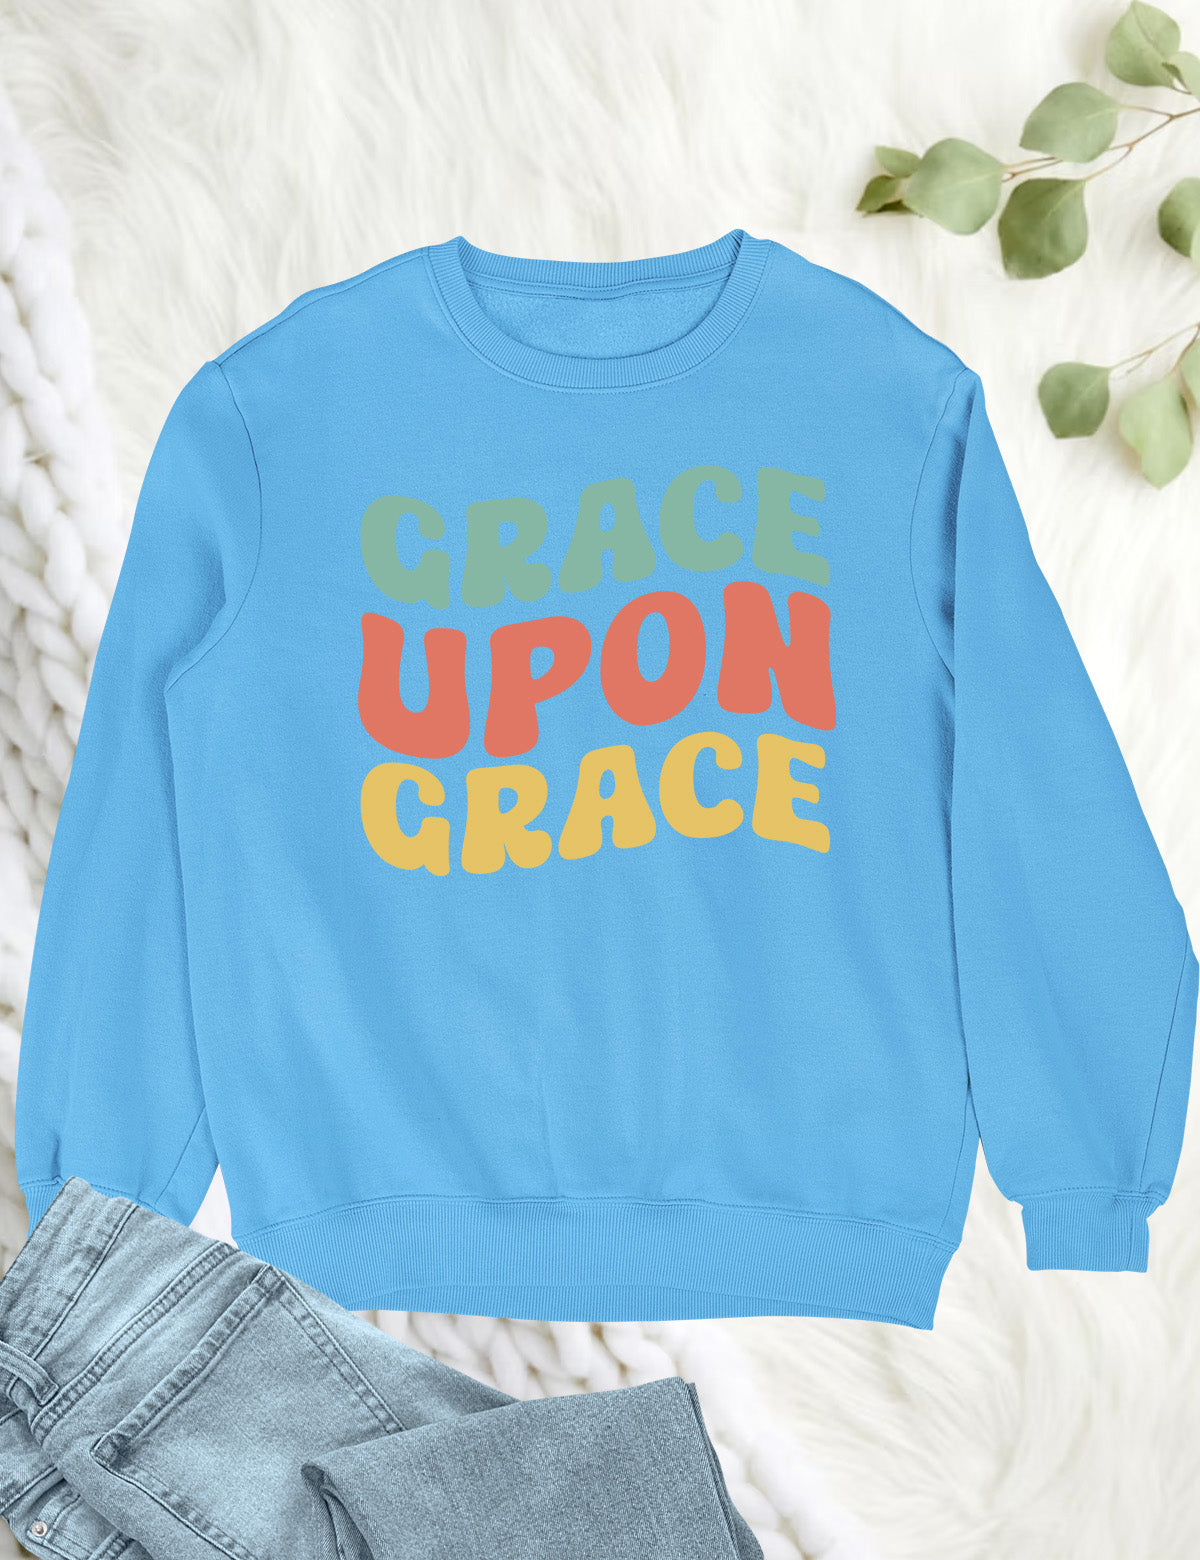 Grace Upon Grace Christian Sweatshirt